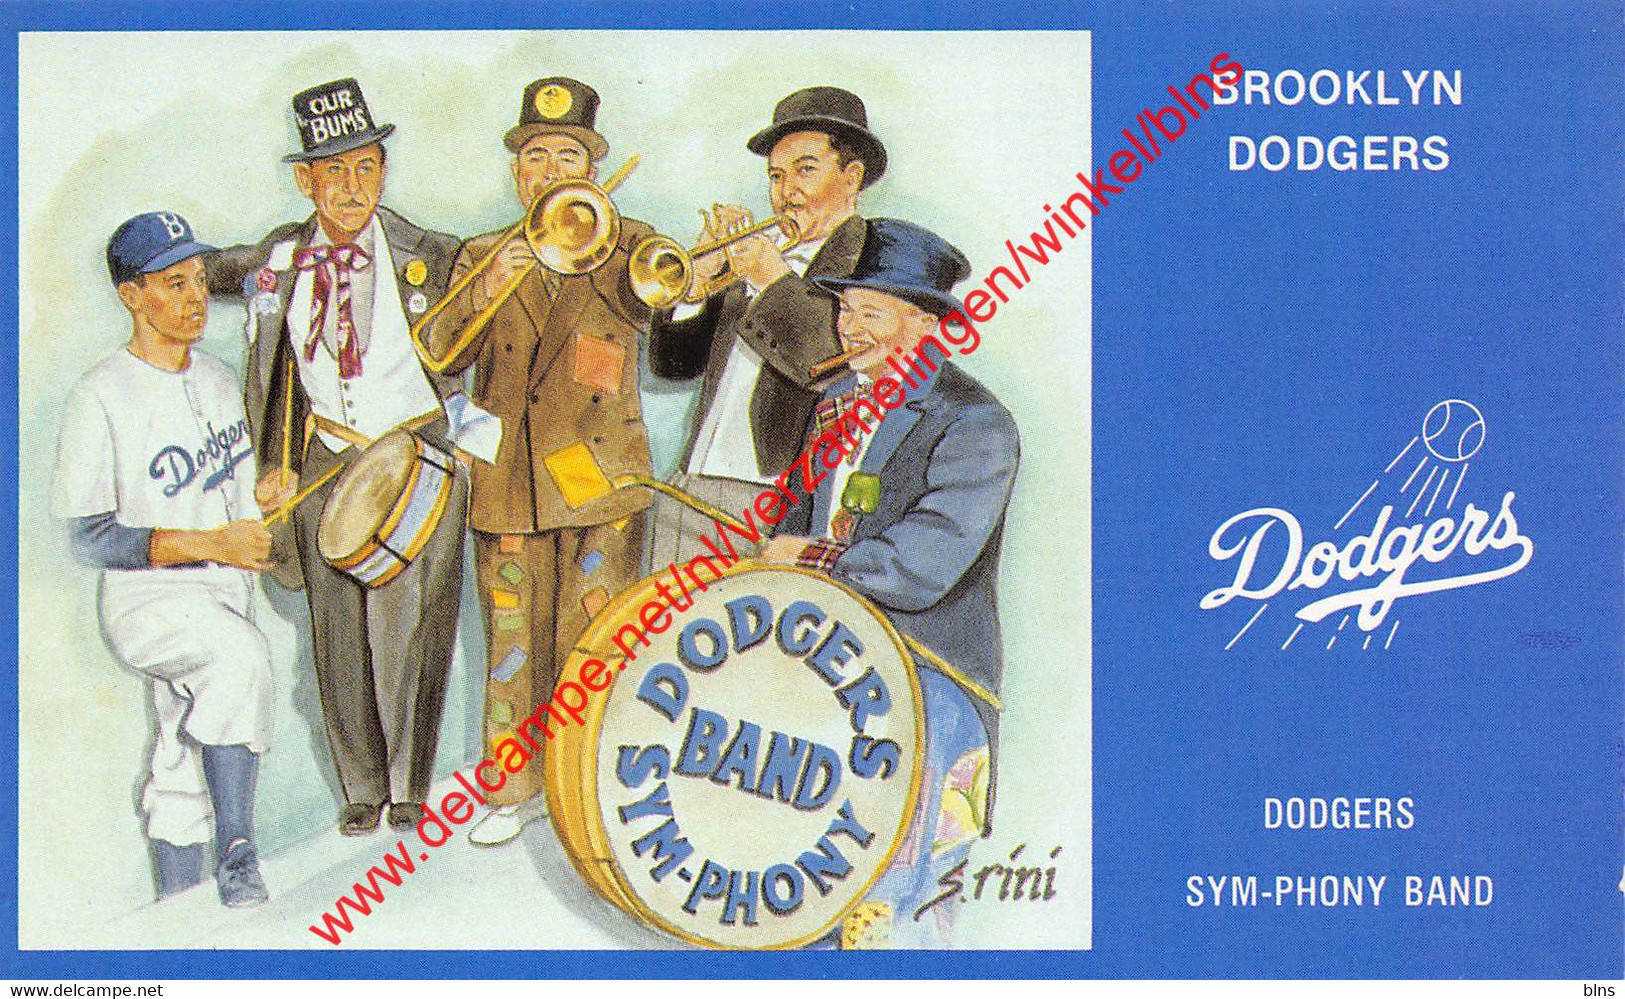 Brooklyn Dodgers - Dodgers Sym-phony Band - Baseball - Brooklyn